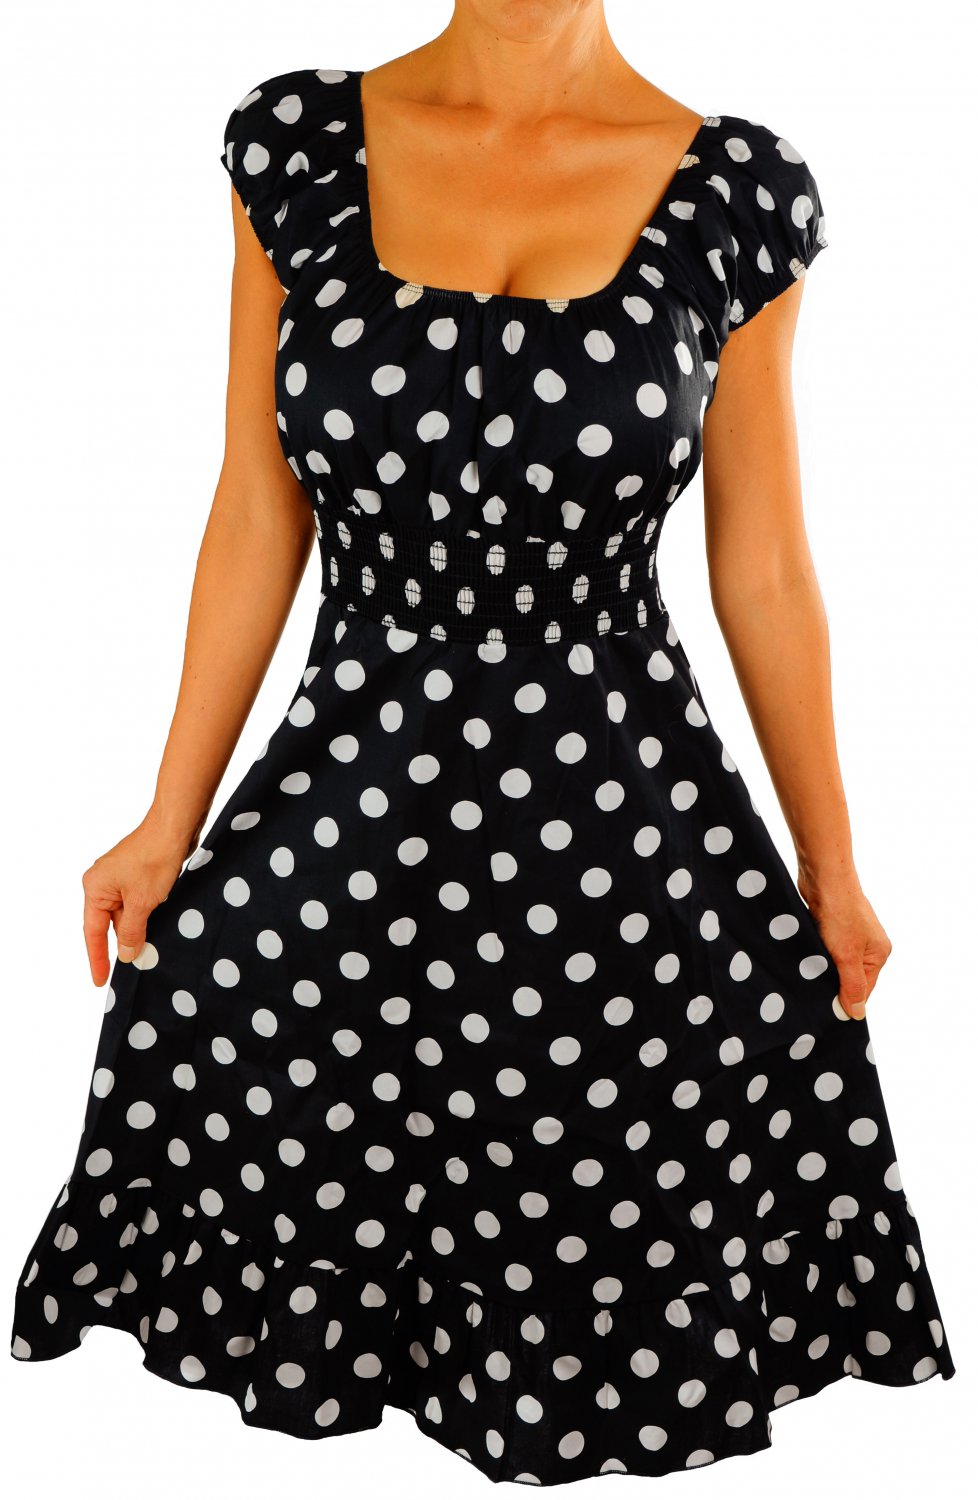 Gm3 Funfash Plus Size Dress New Black White Polka Dots Rockabilly Dress